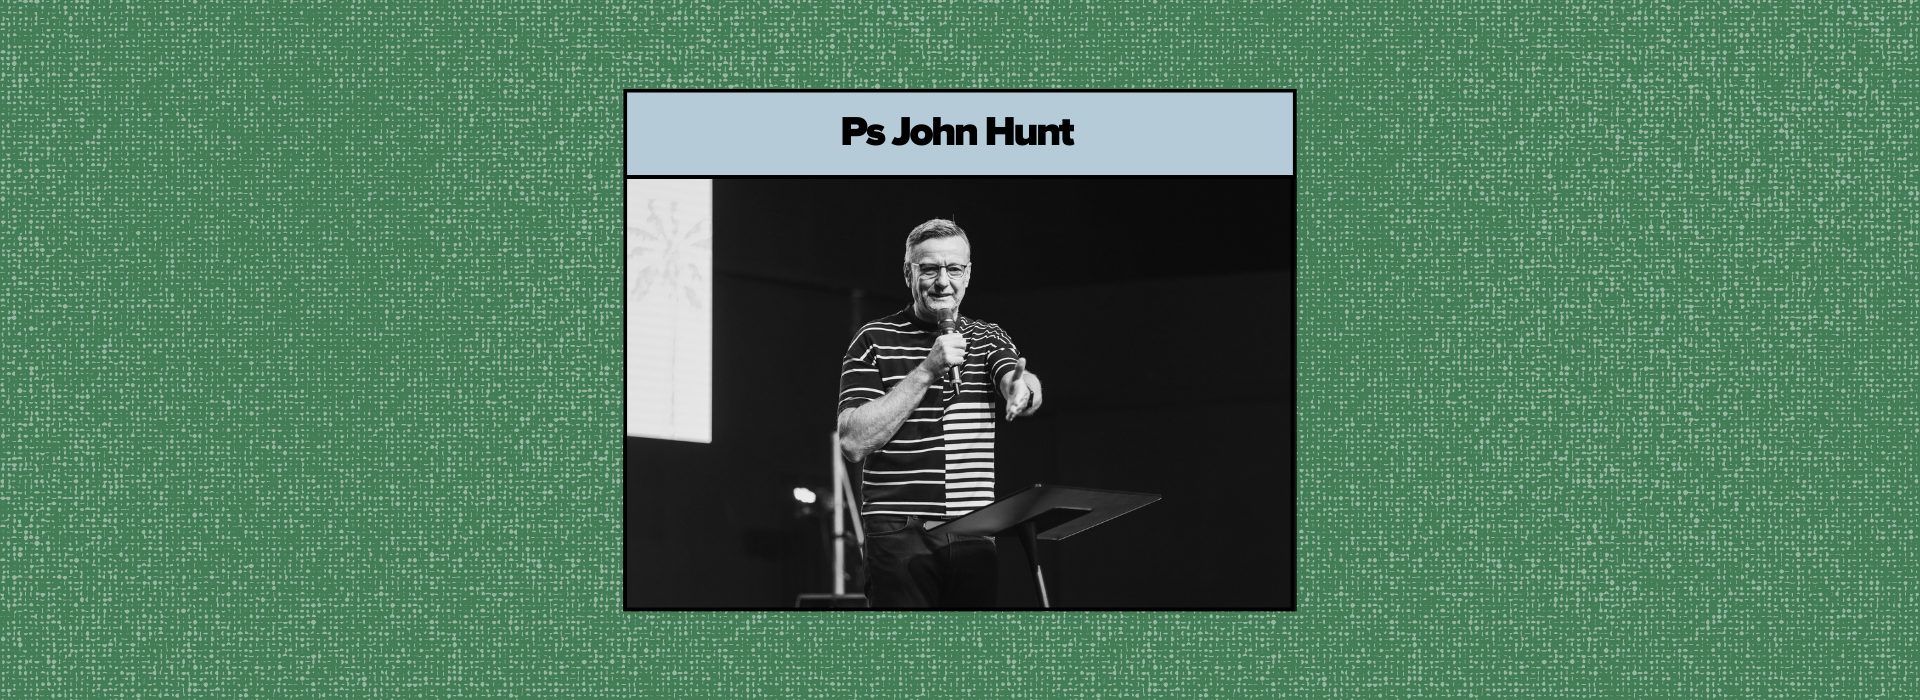 Ps John Hunt